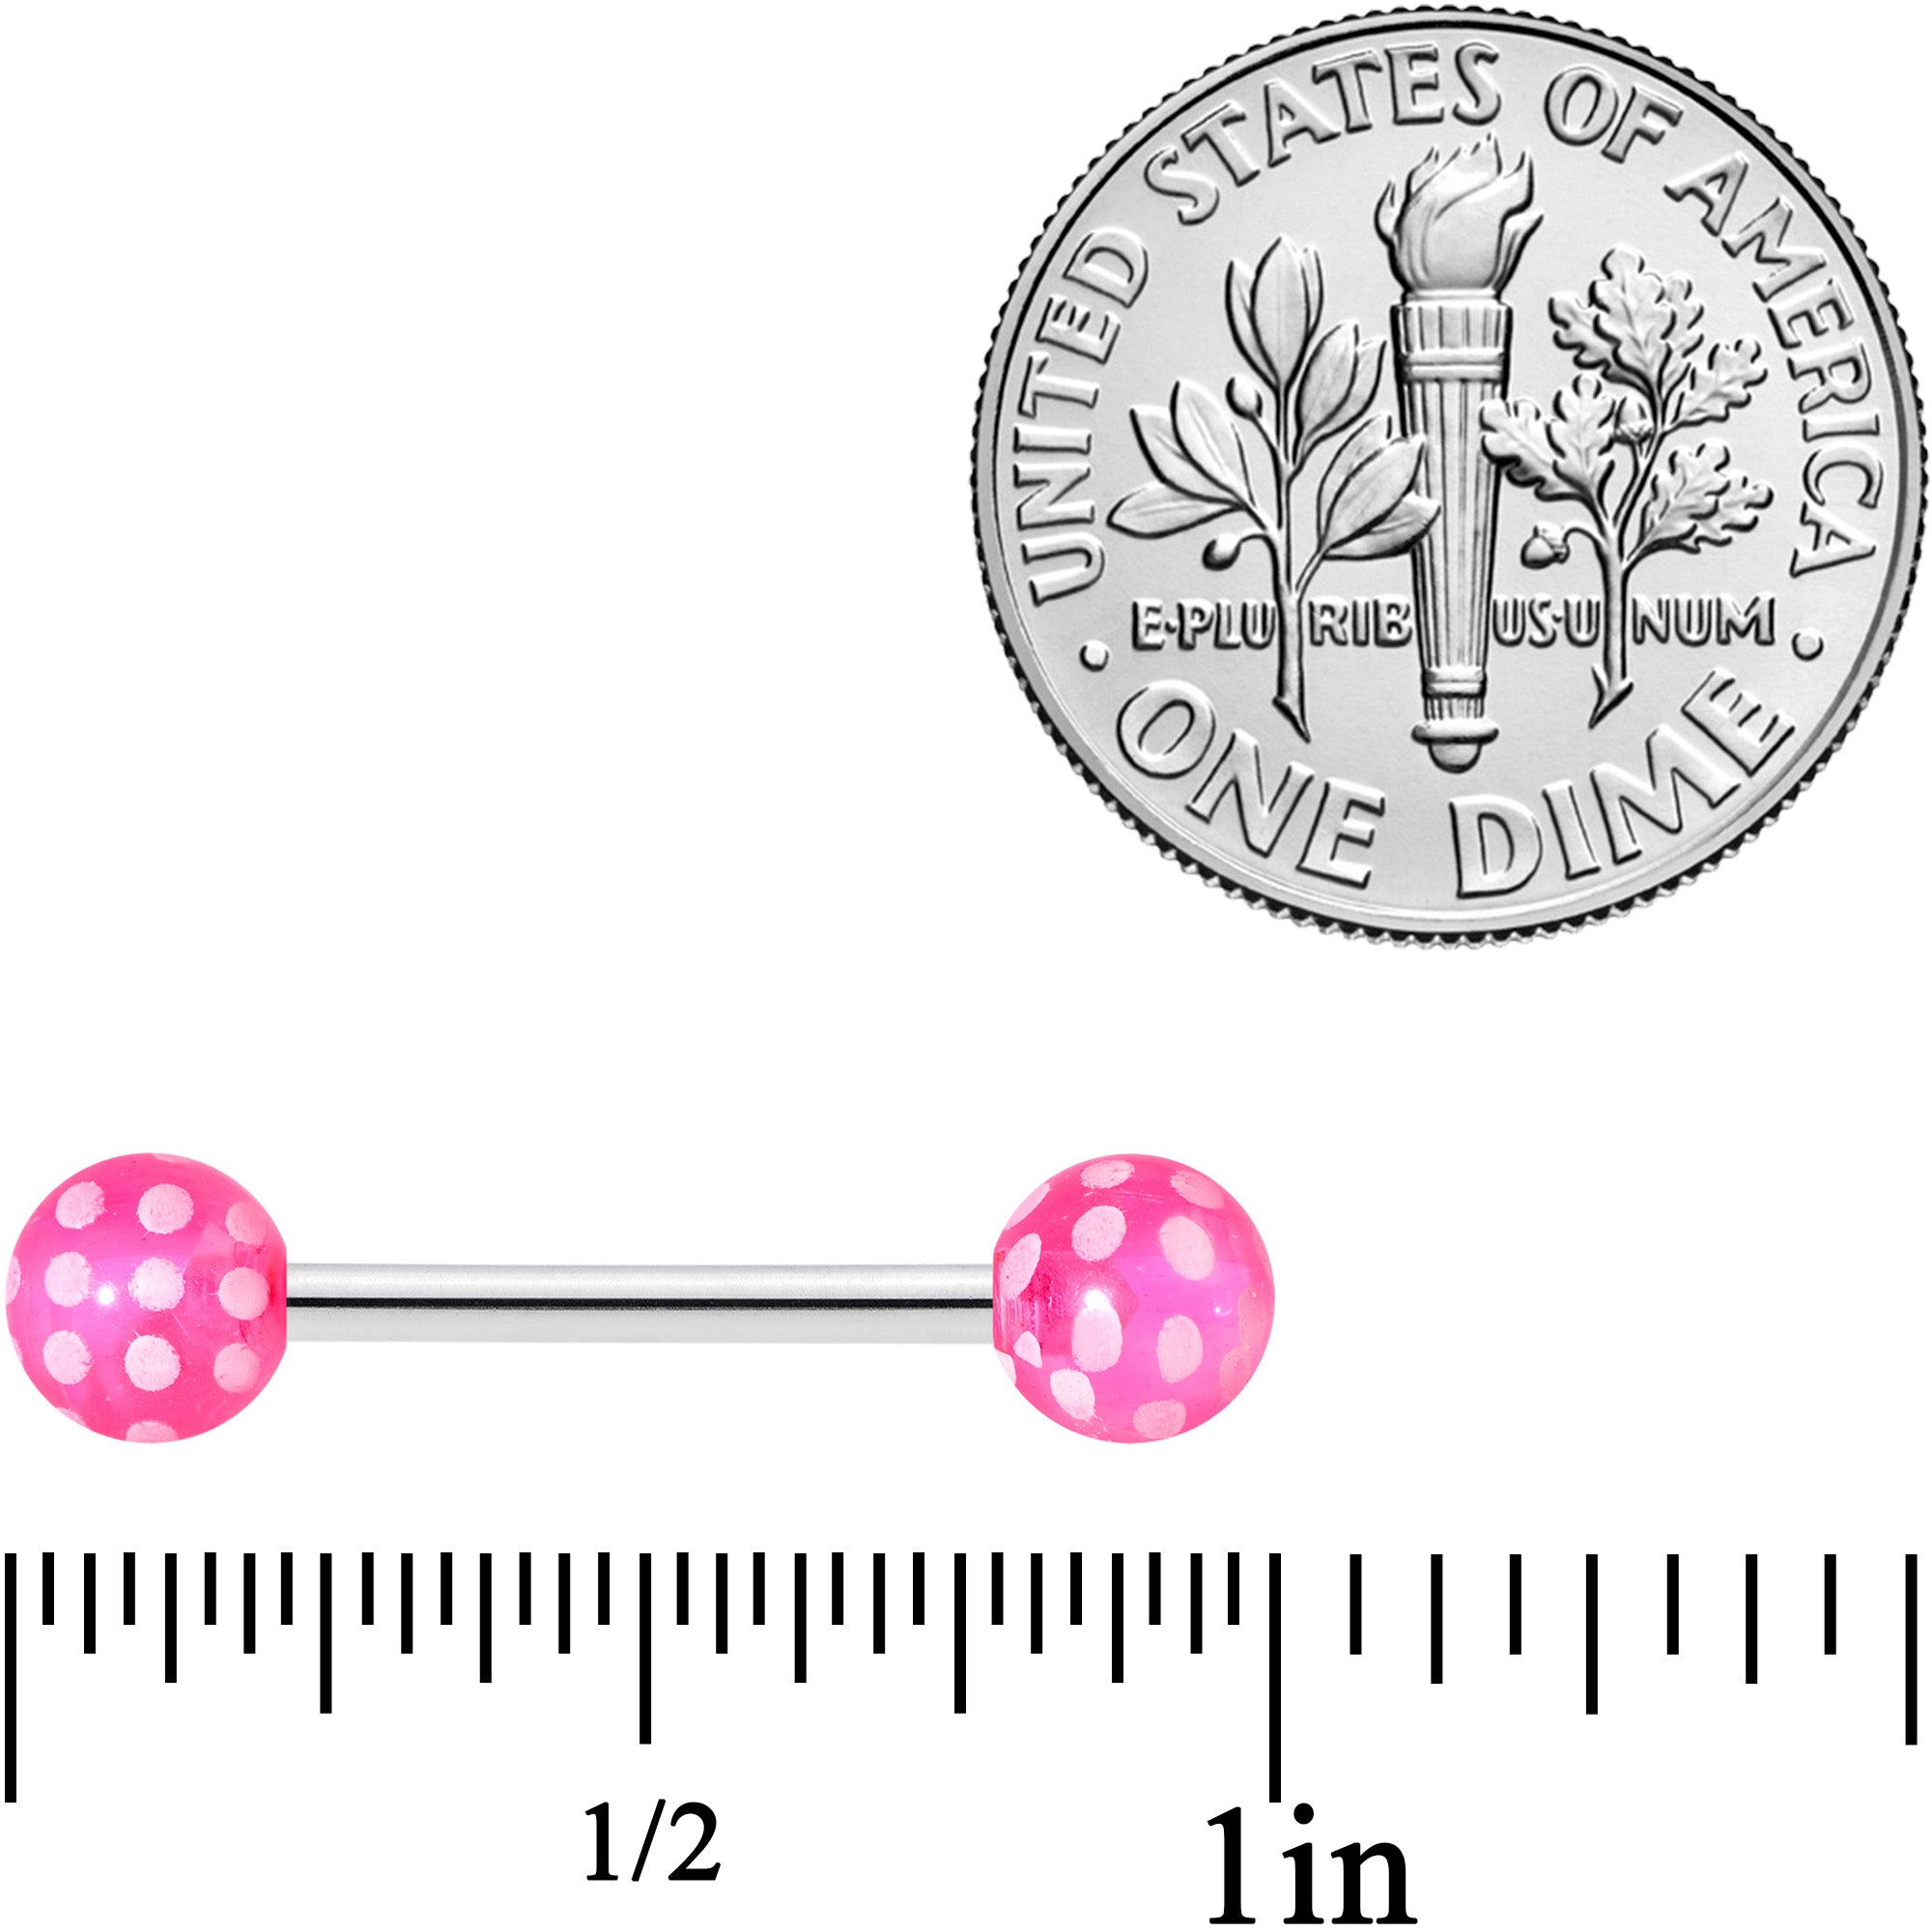 14 Gauge 9/16 Pink White Polka Dot UV Ball Barbell Nipple Ring Set